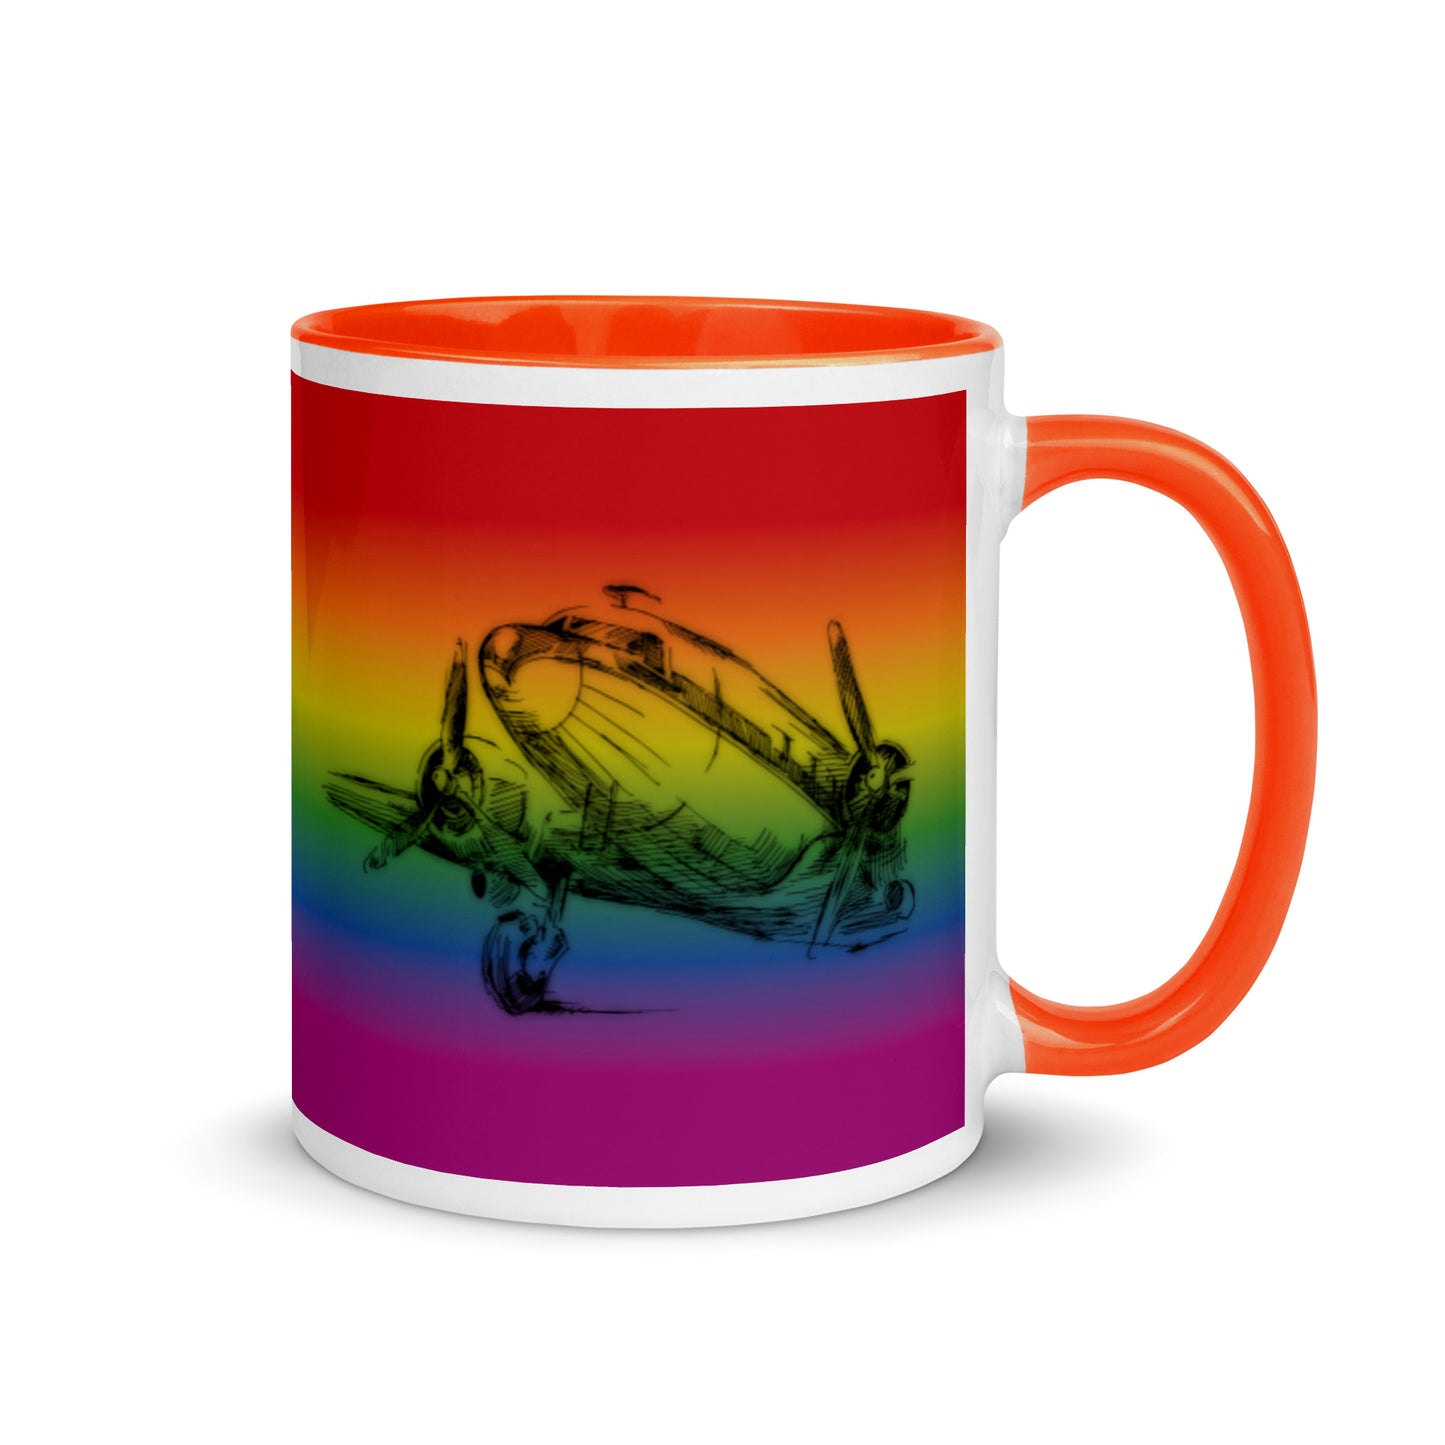 Aero 1 - 11 oz. mug with color inside (rainbow)